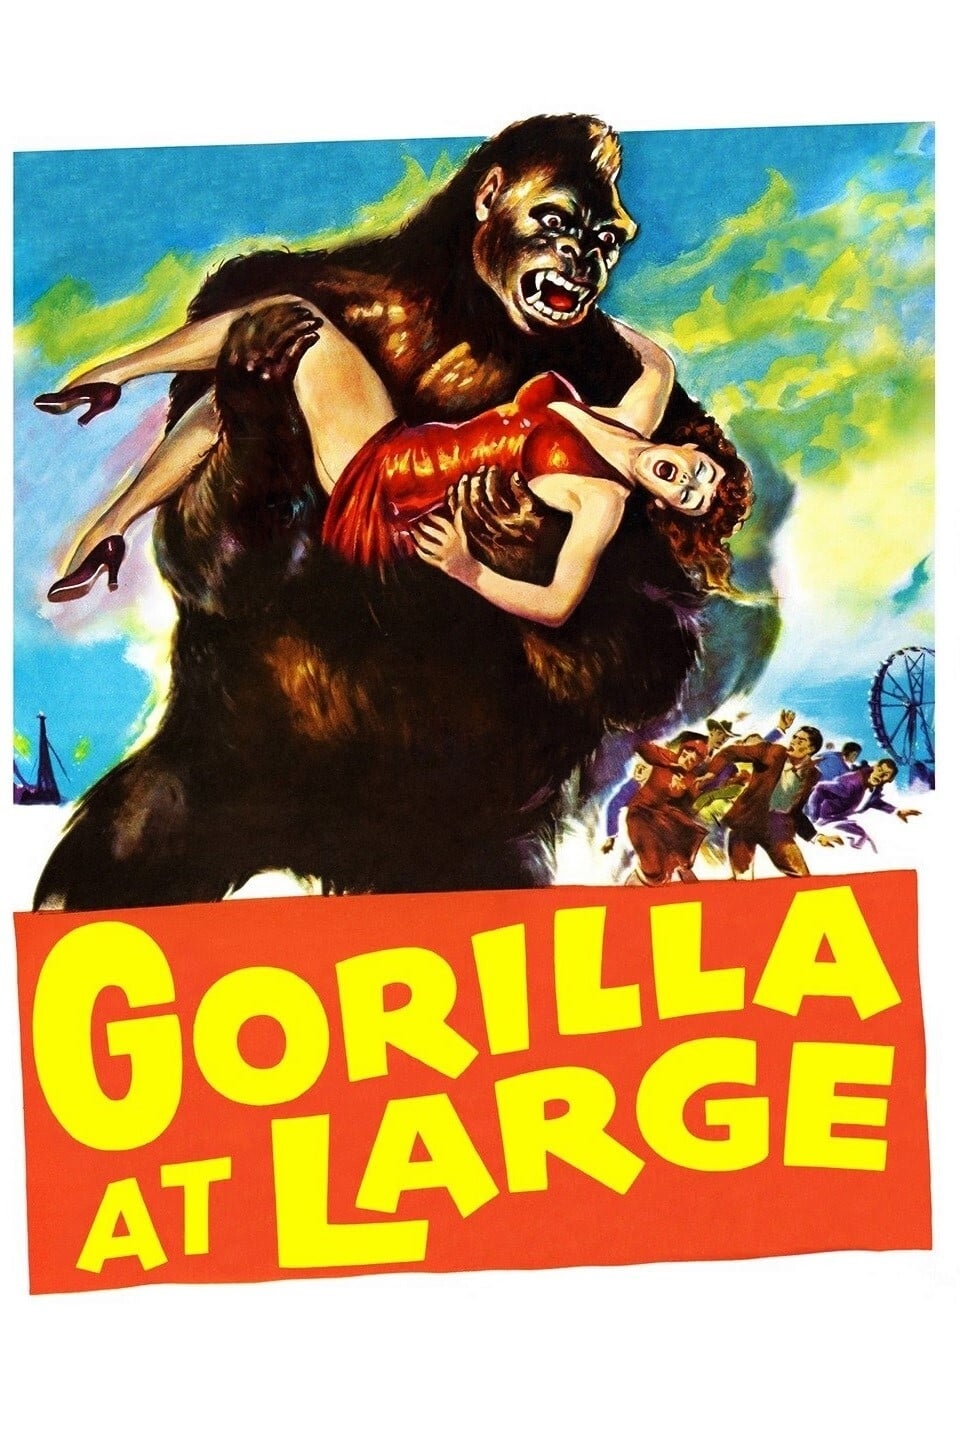 Caratula de Gorilla at Large (El gorila asesino) 